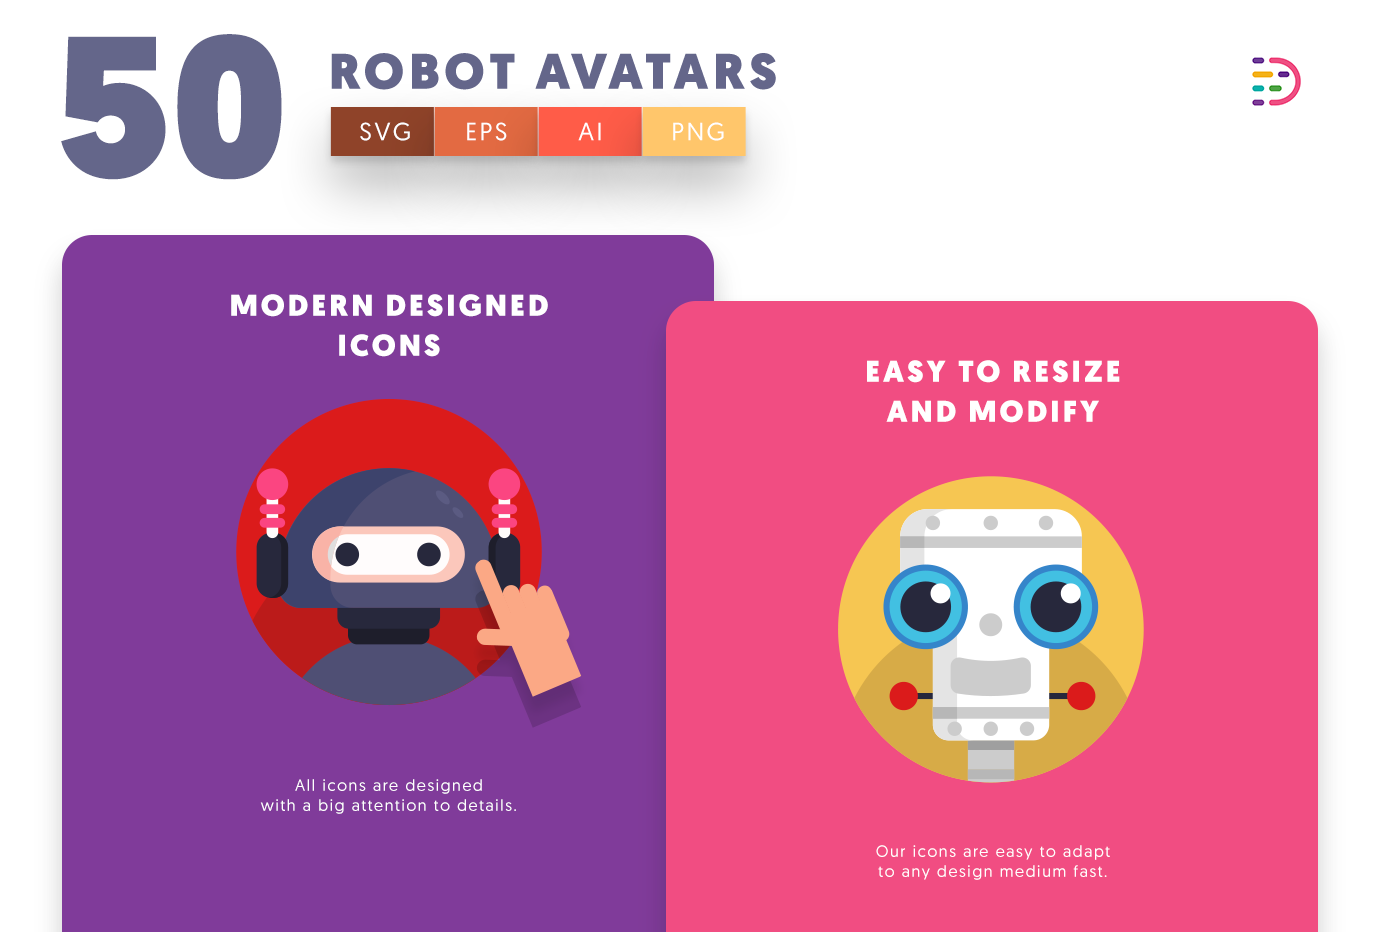 Robot Avatar icons